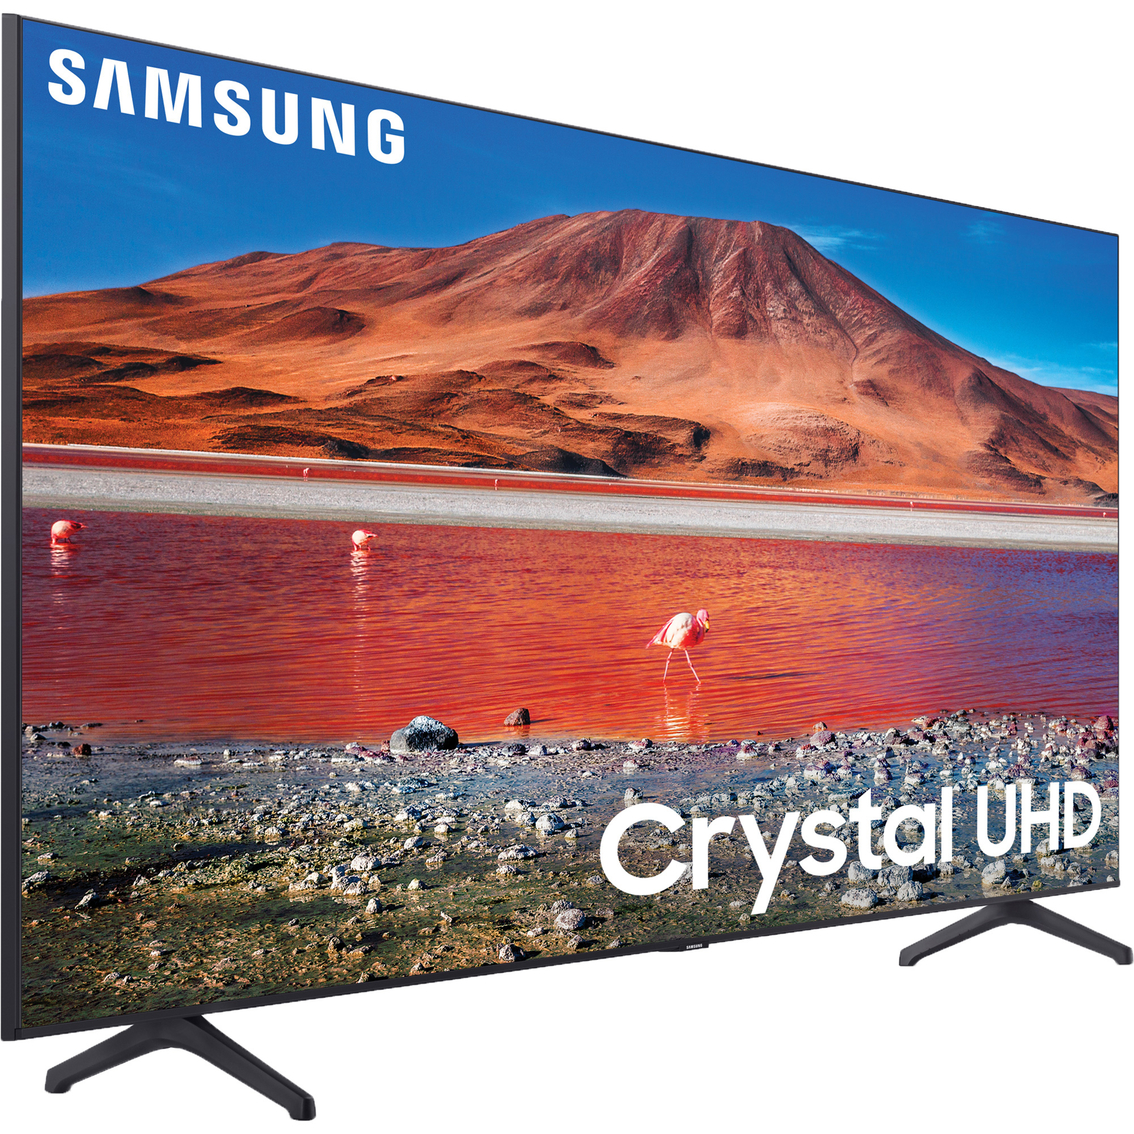 Samsung 50 in. Class TU7000 Crystal UHD 4K HDR Smart TV UN50TU7000FXZA - Image 2 of 7